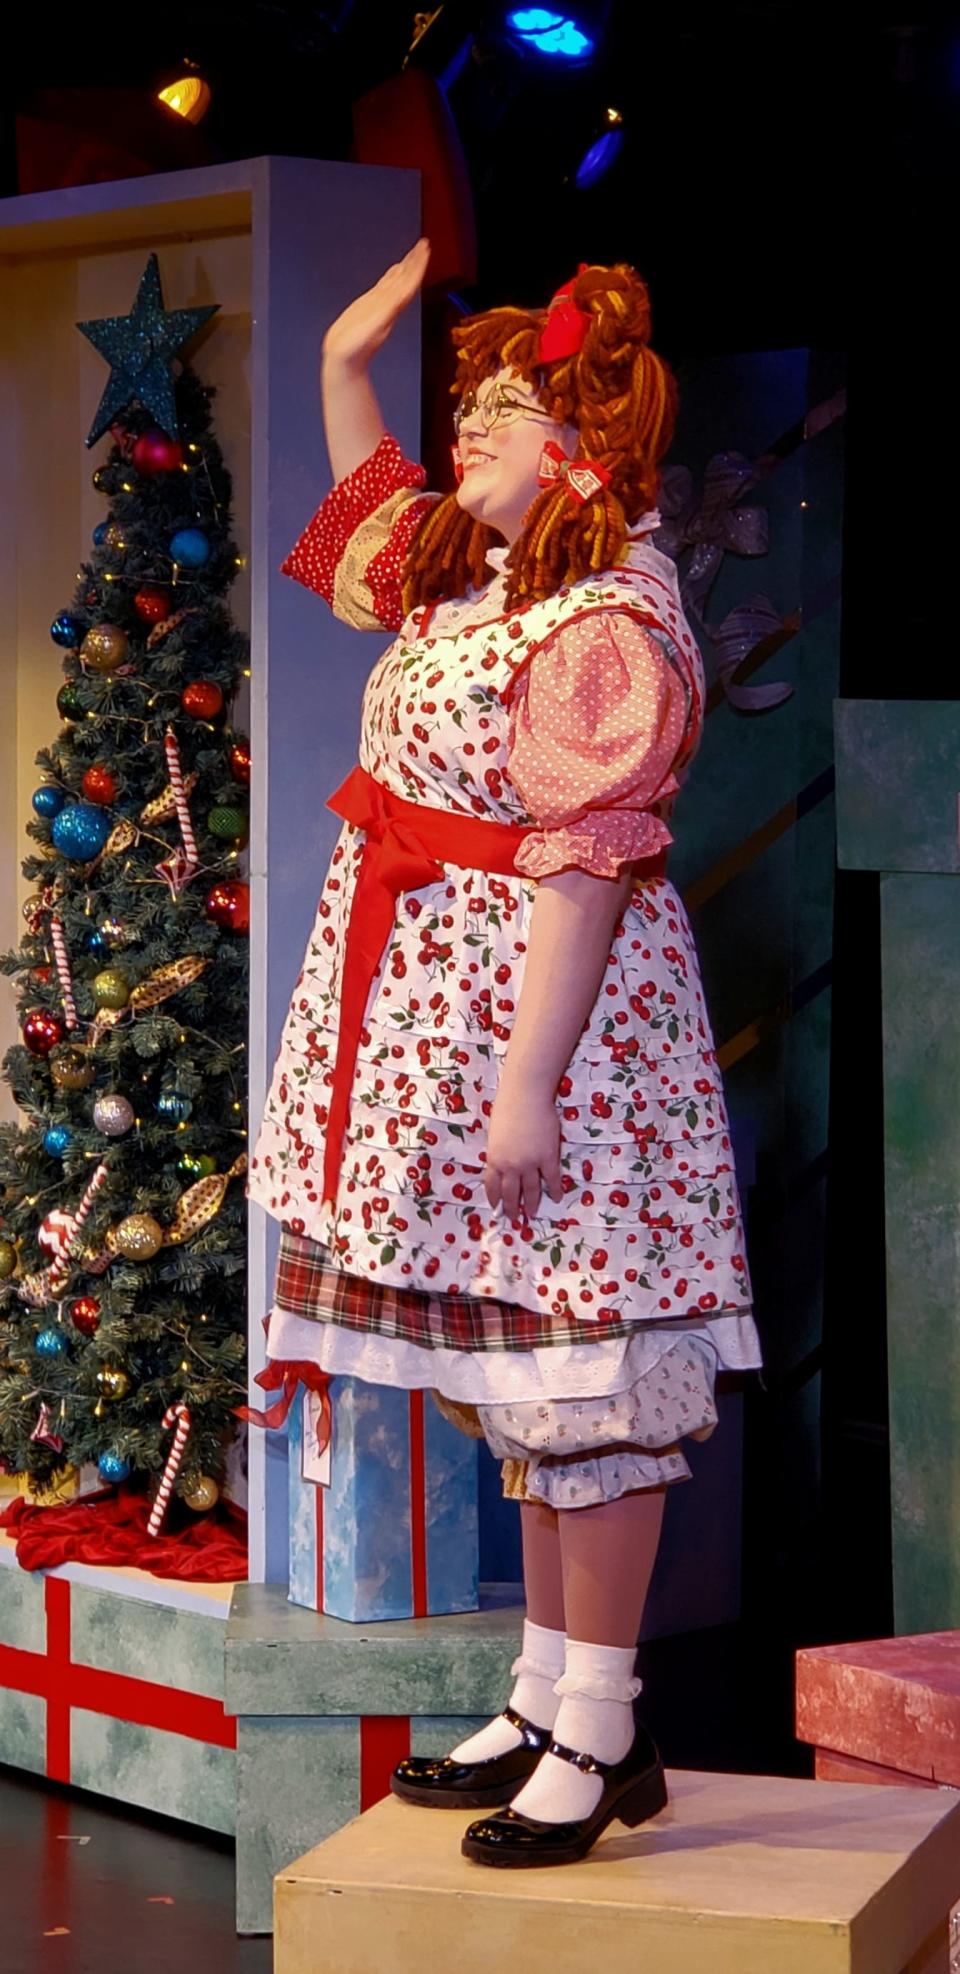 Samantha Bonzi plays Eleanor in "Eleanor's Very Merry Christmas Wish — The Musical" from Nov. 26 through Dec. 11, 2022, at The GhostLight Theatre in Benton Harbor.